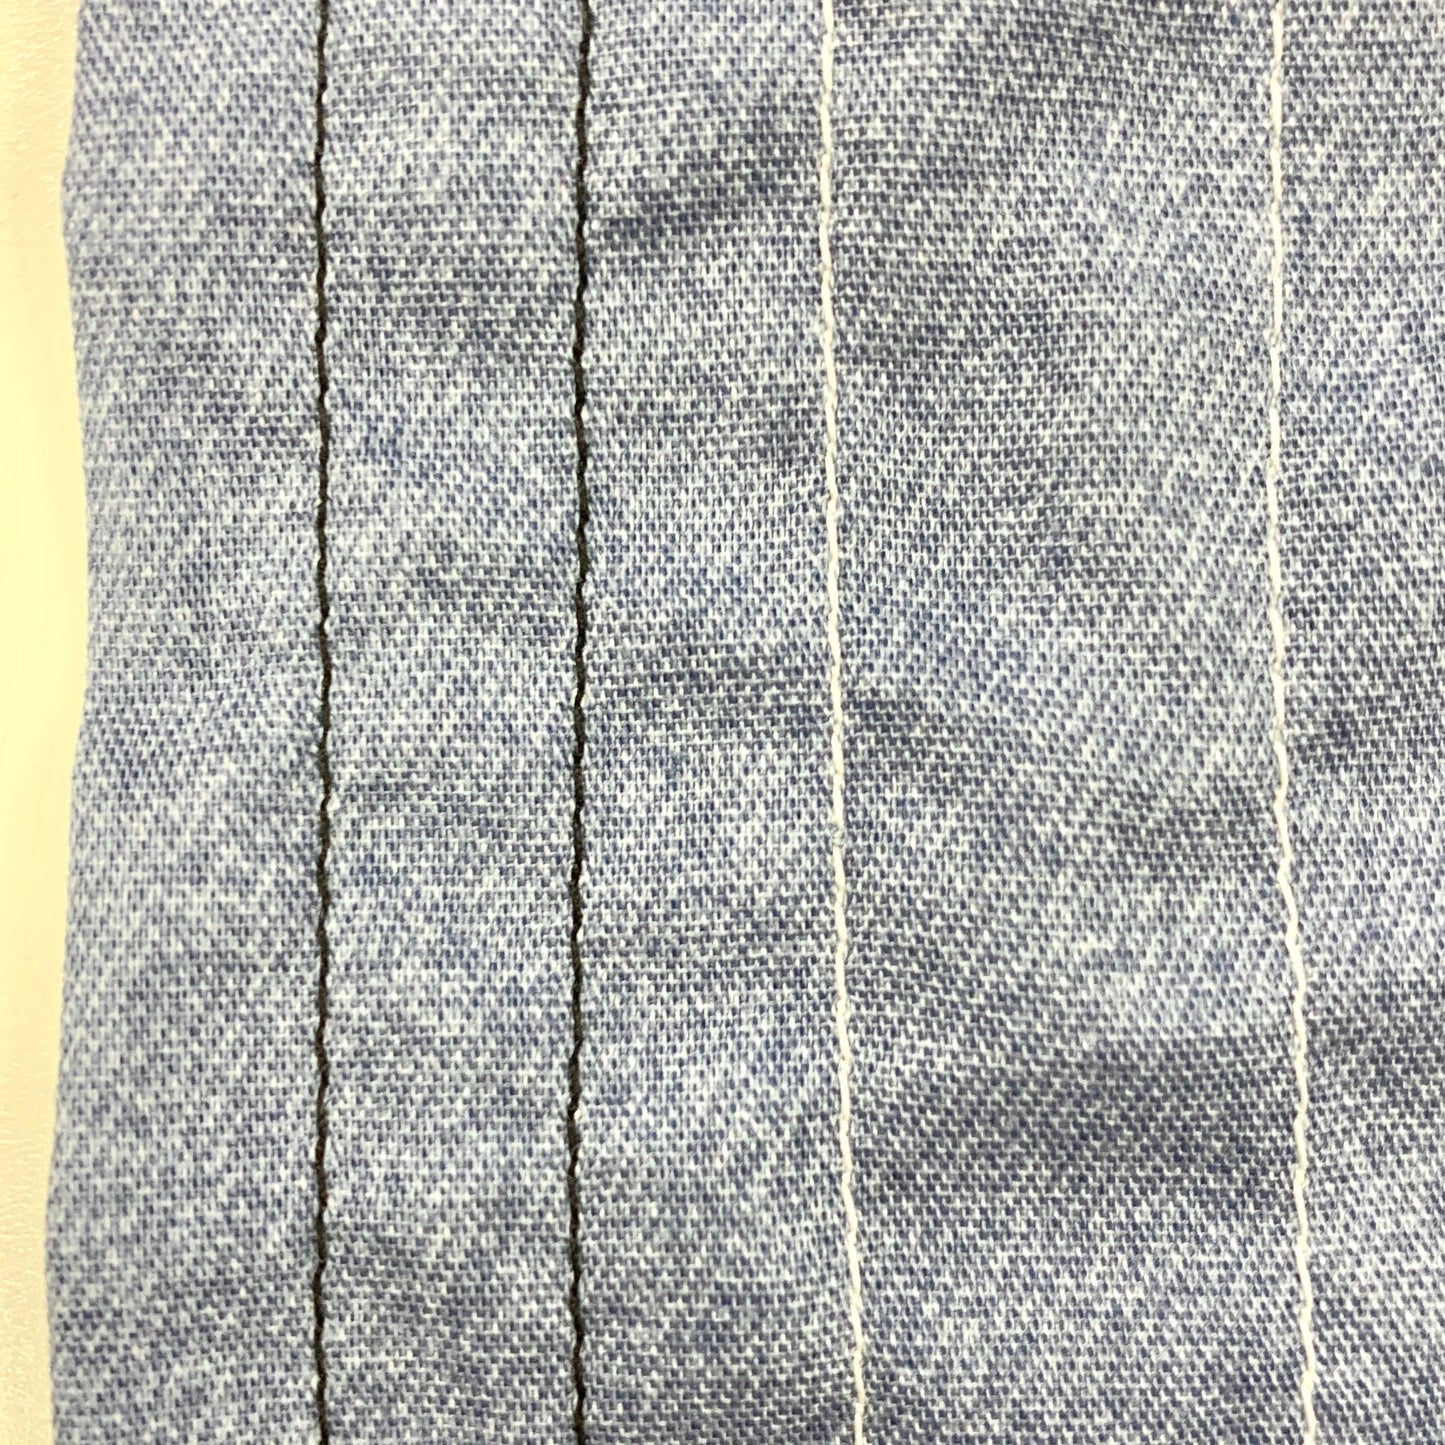 Fujix | #60 sewing thread 縫紉線(一般布使用) 200m - 150 colors (401-403, 3-103)